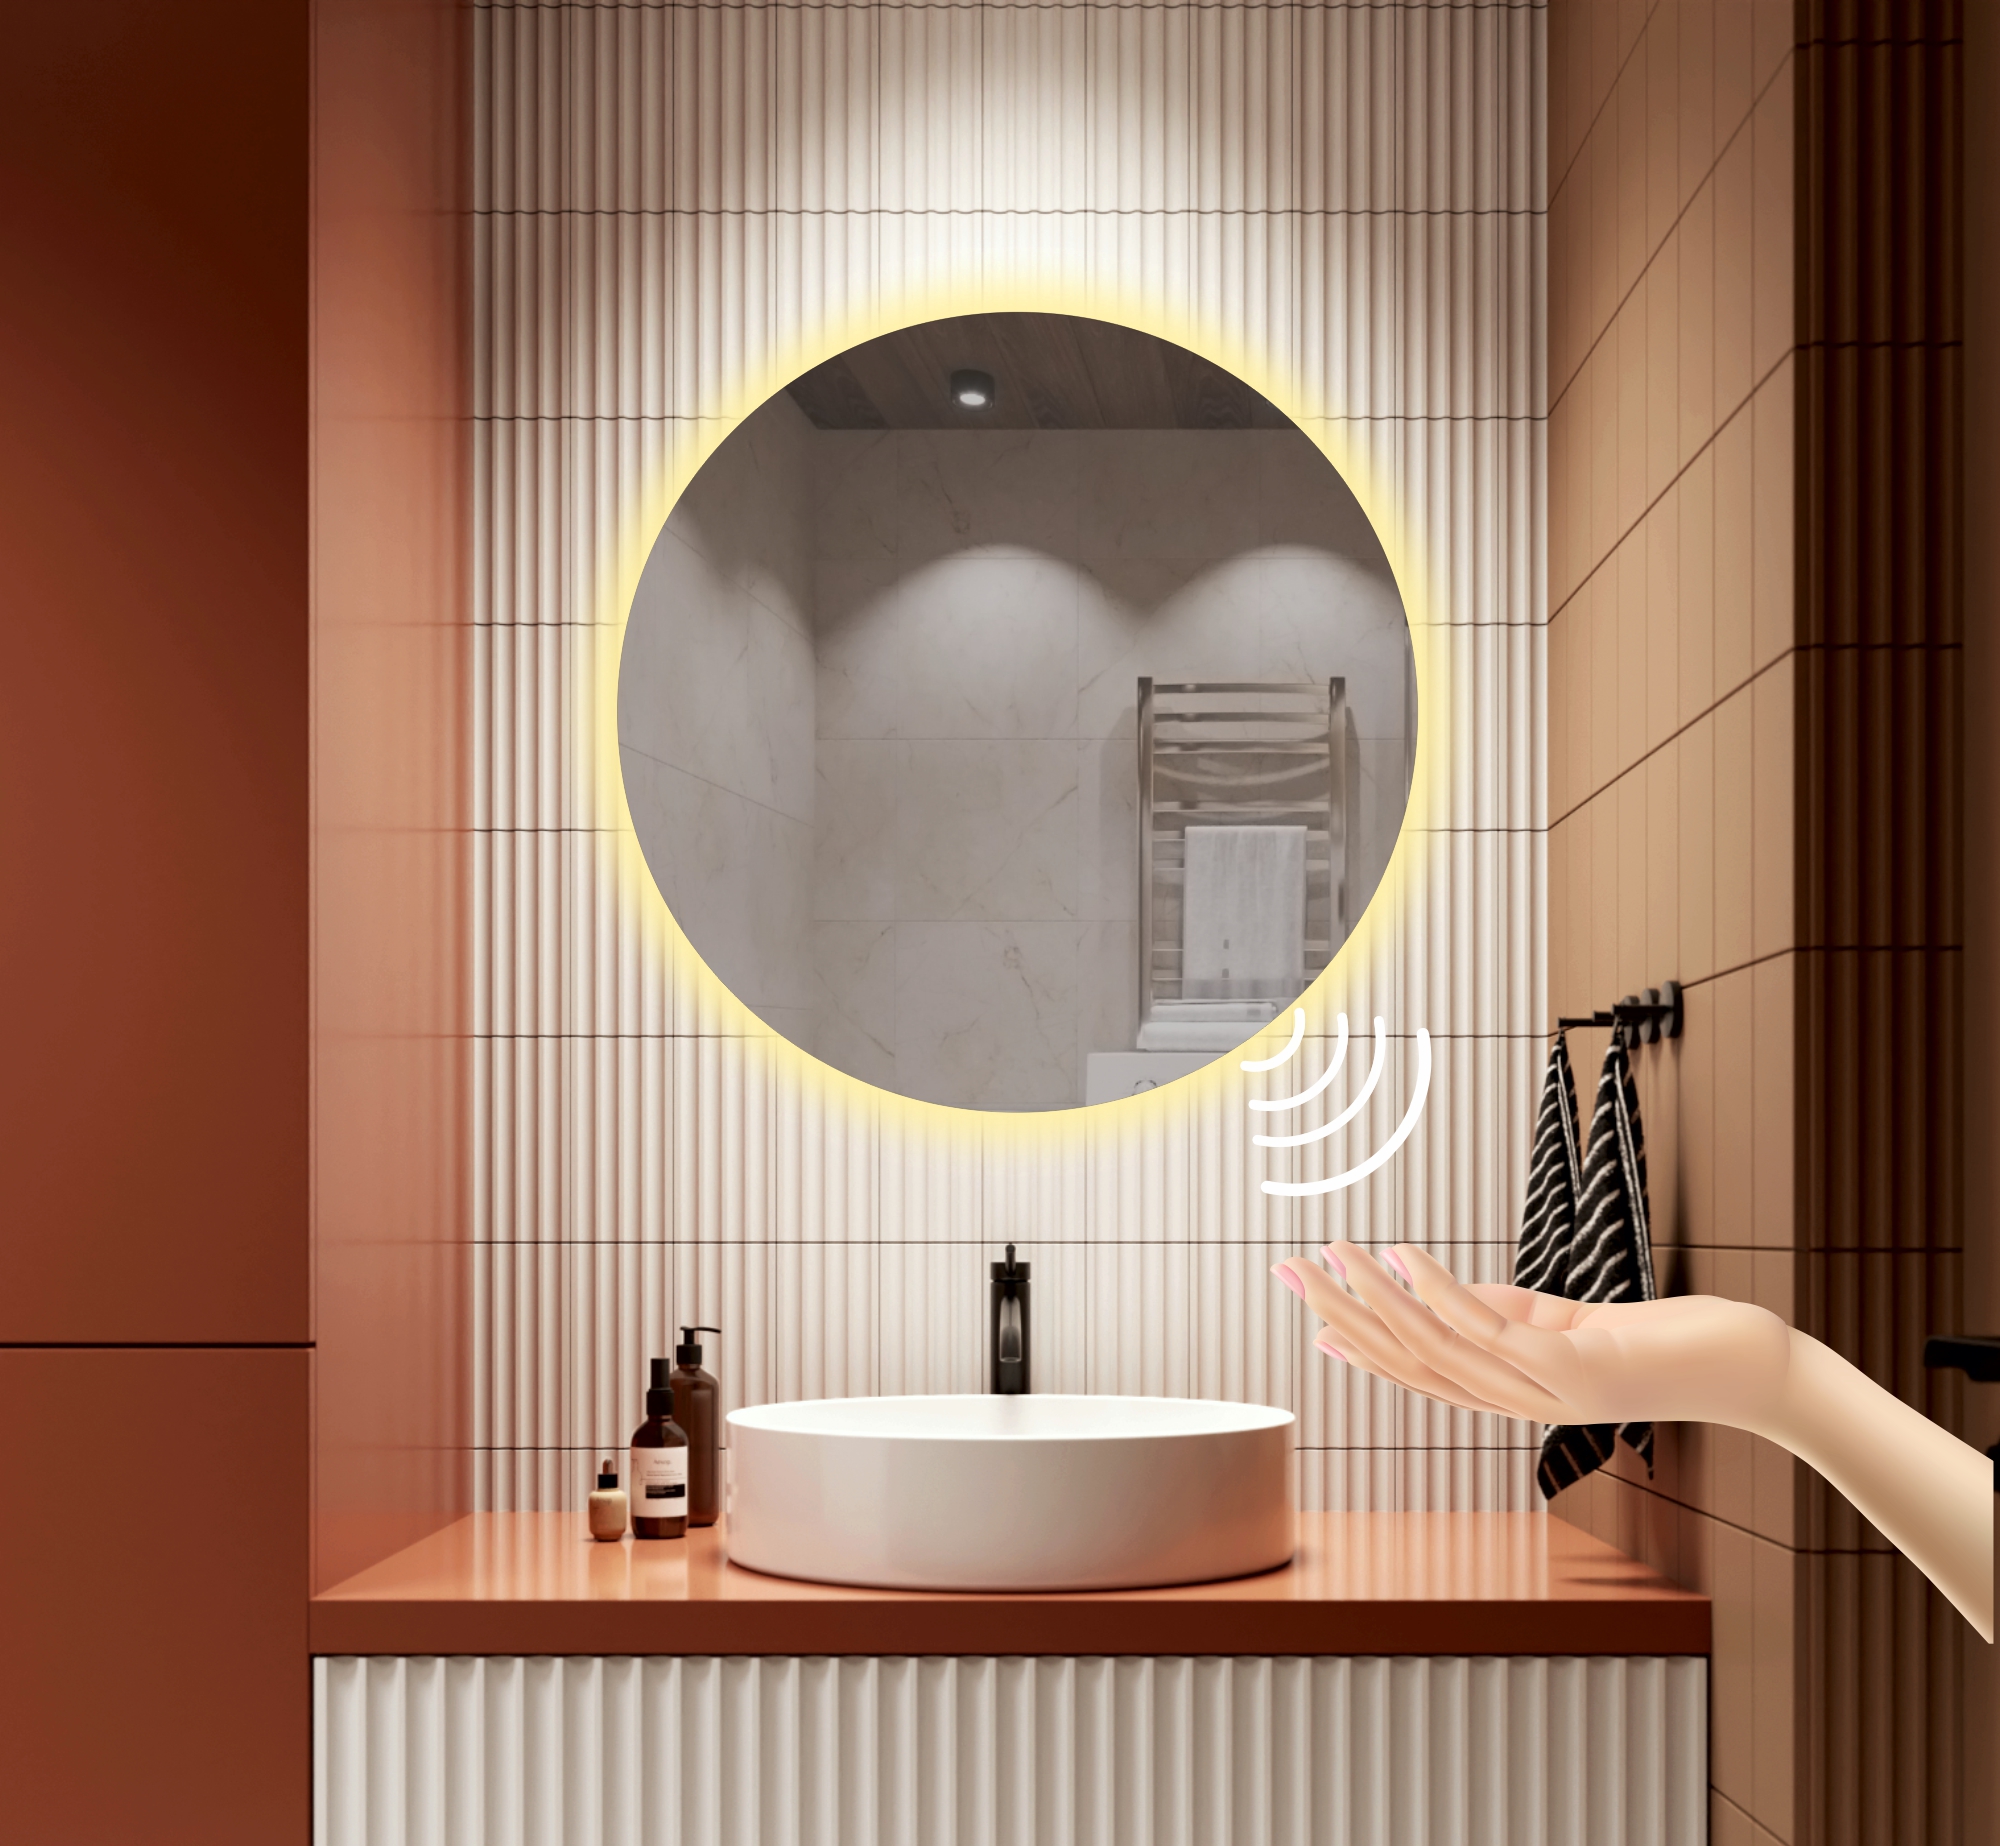 Зеркало для ванной Alfa Mirrors с теплой подсветкой 3200К круглое 40см, арт. Na-4Vzt